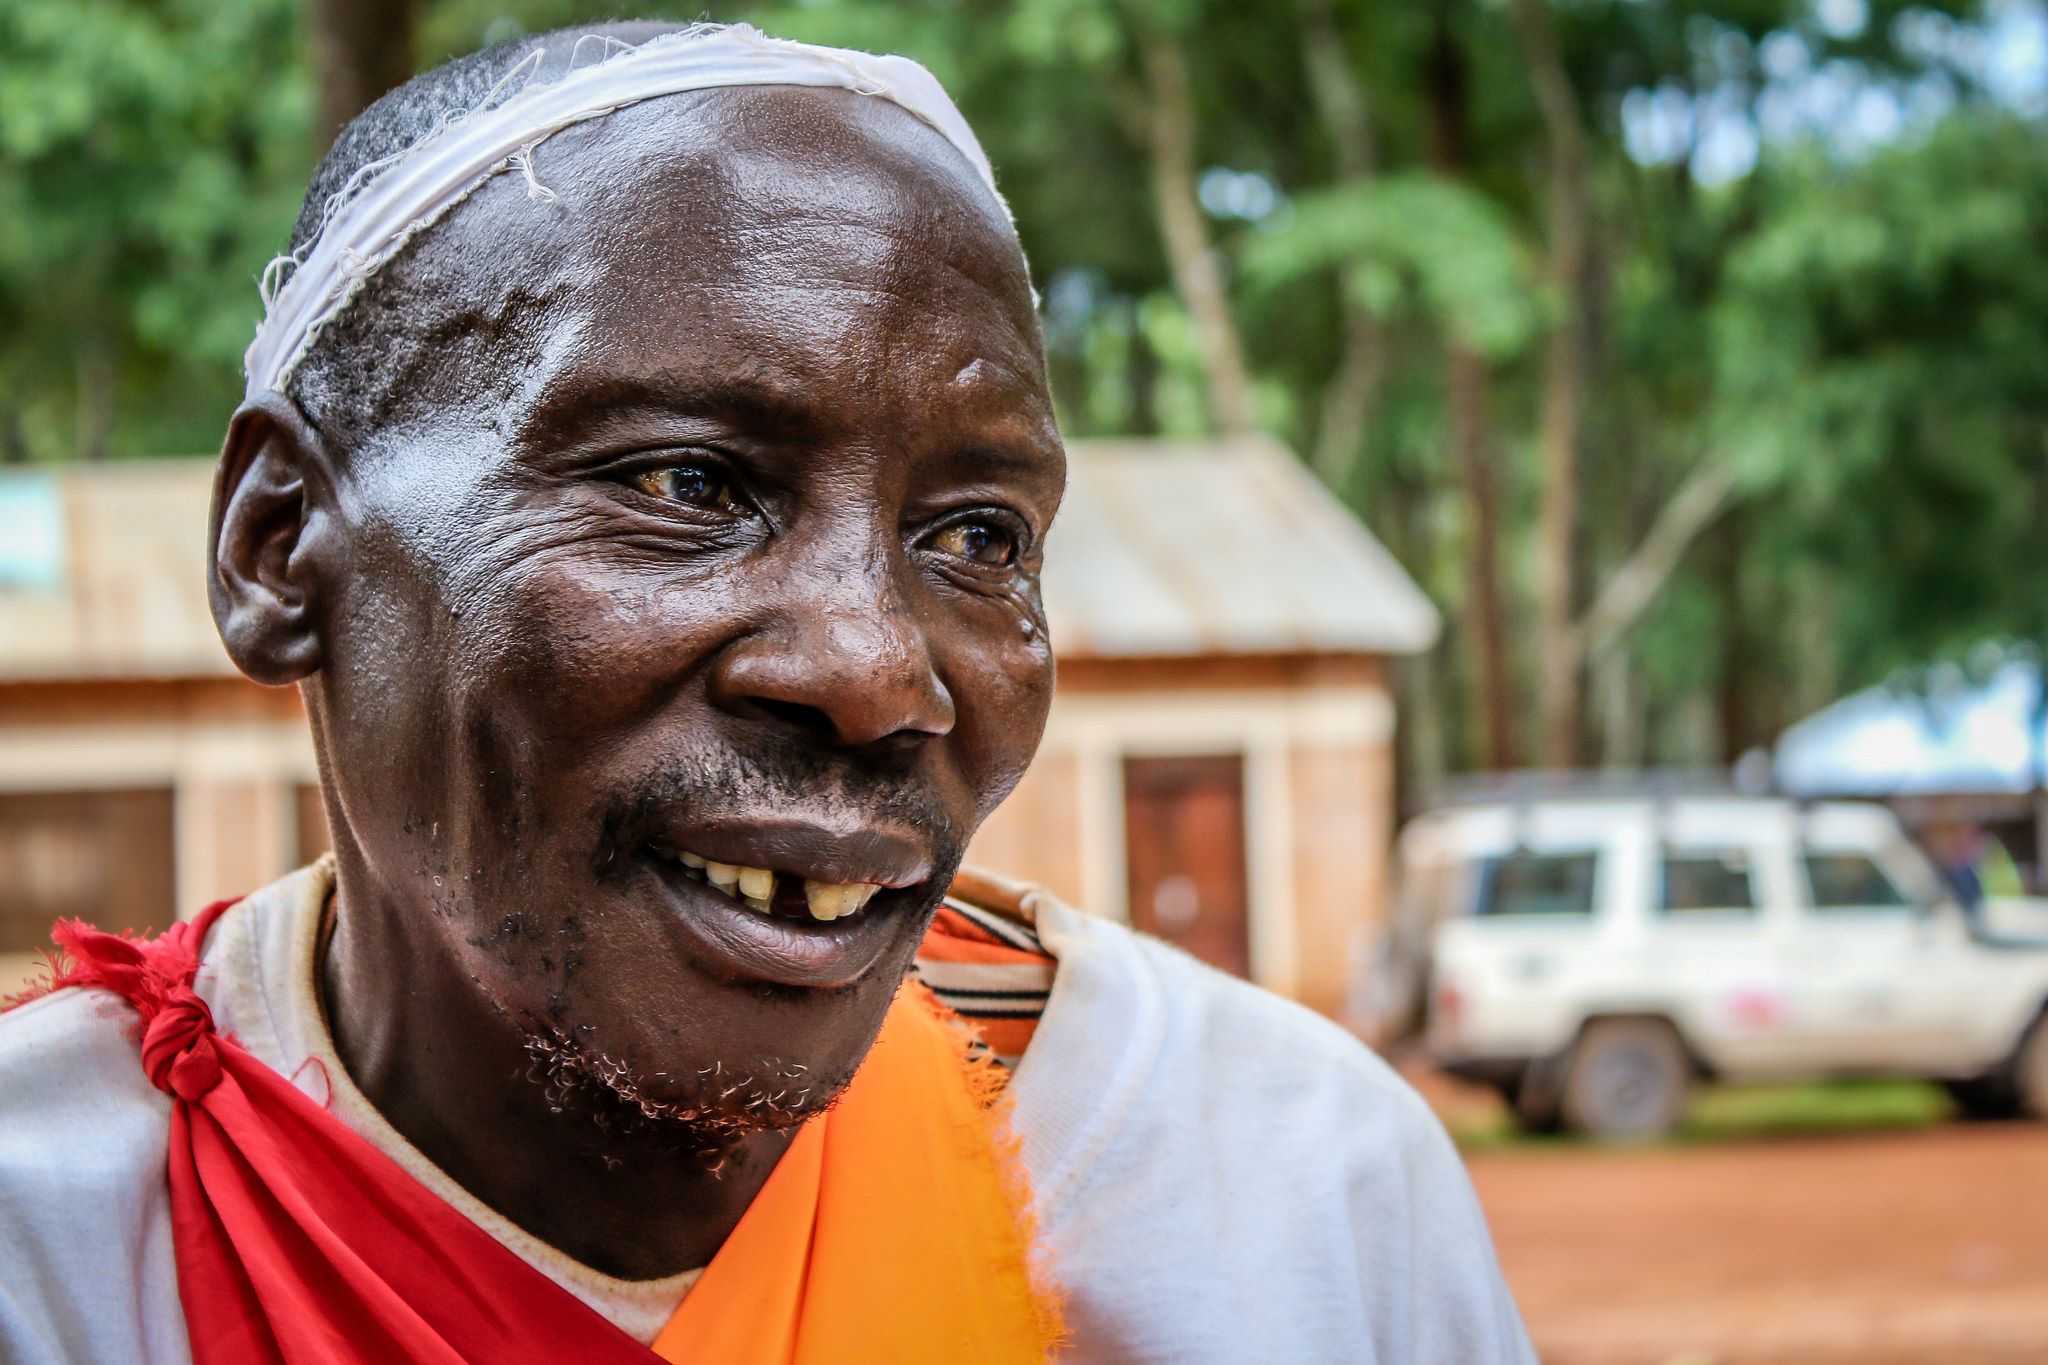 Portrait of Burundi refugee Augustin (c) Ben Small/HelpAge International